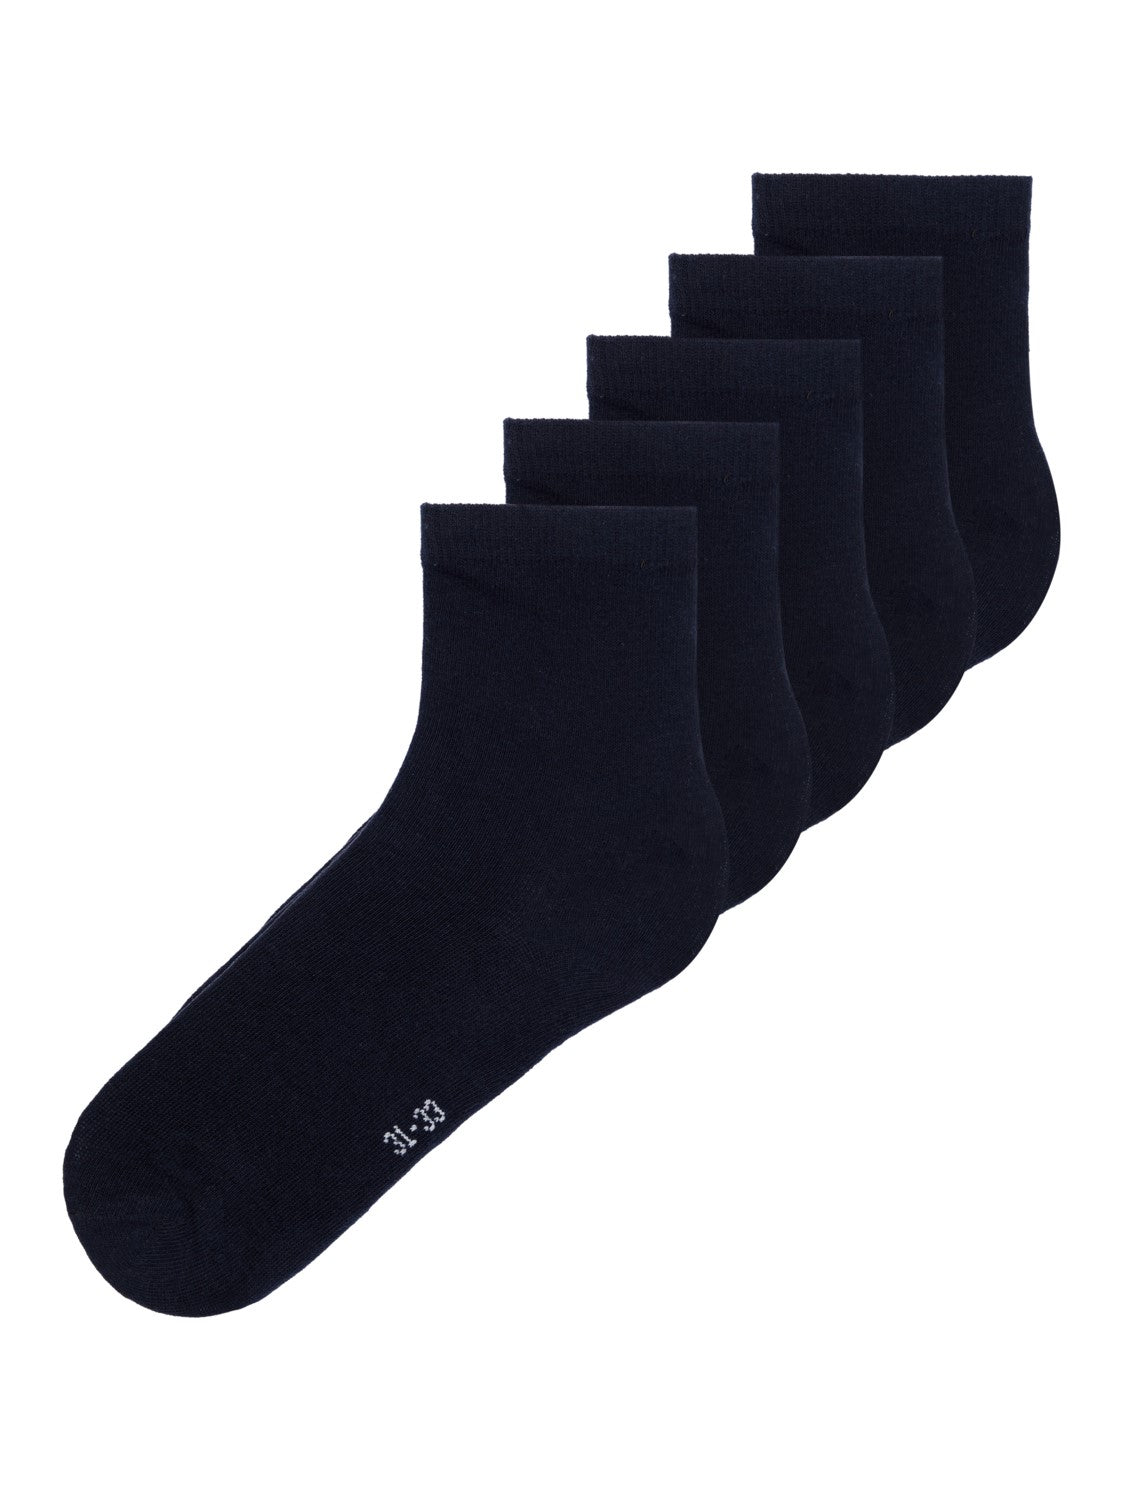 Name it Boys 5-Pack Black Socks